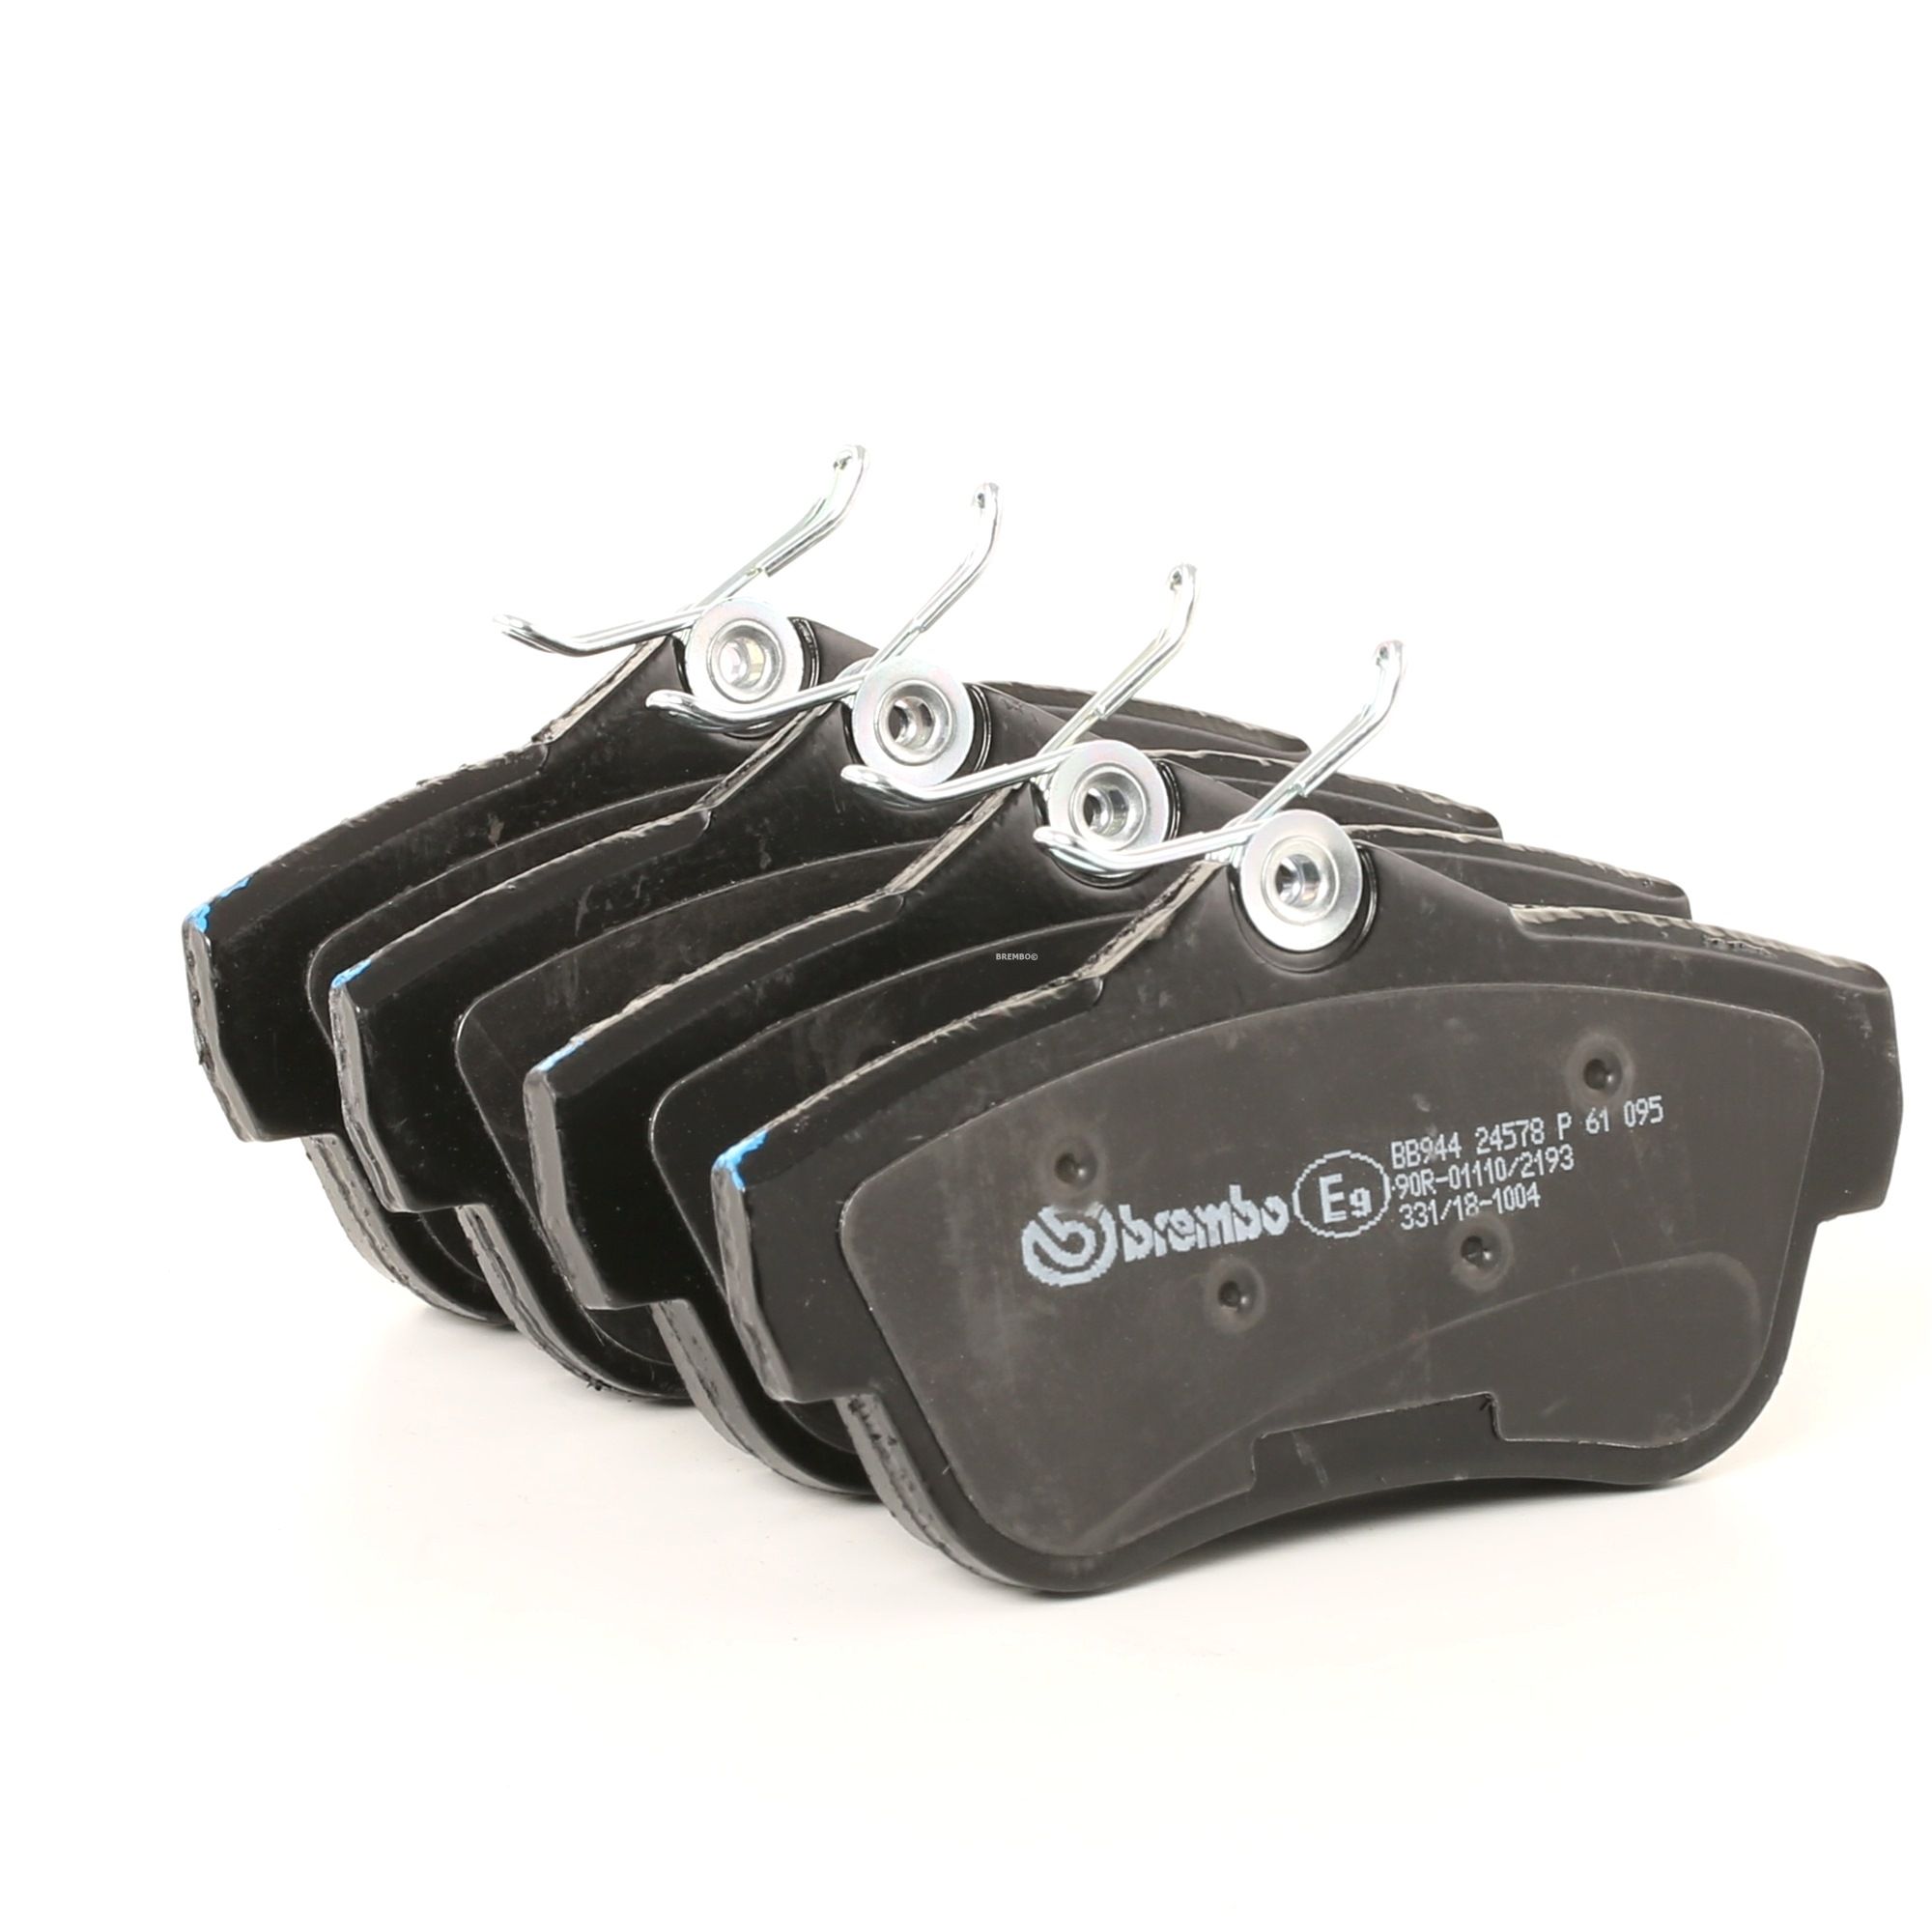 Citroen DISPATCH Set of brake pads 1661632 BREMBO P 61 095 online buy